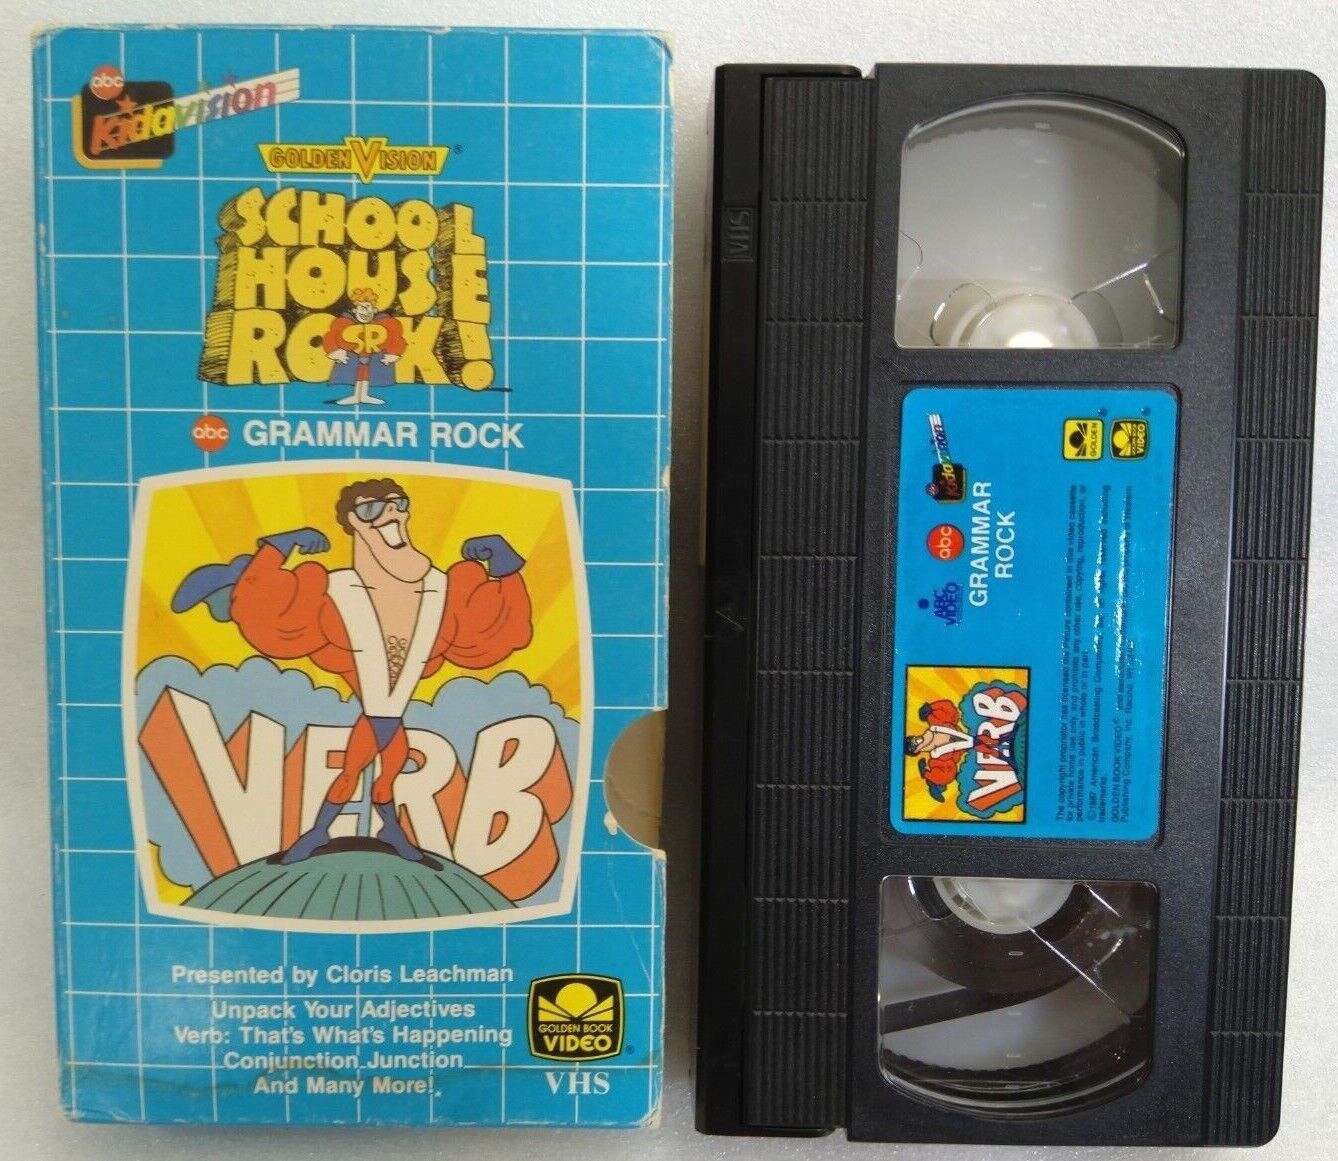 Primary image for VHS School House Rock - Grammar Rock (VHS, 1987, Golden Books Video)